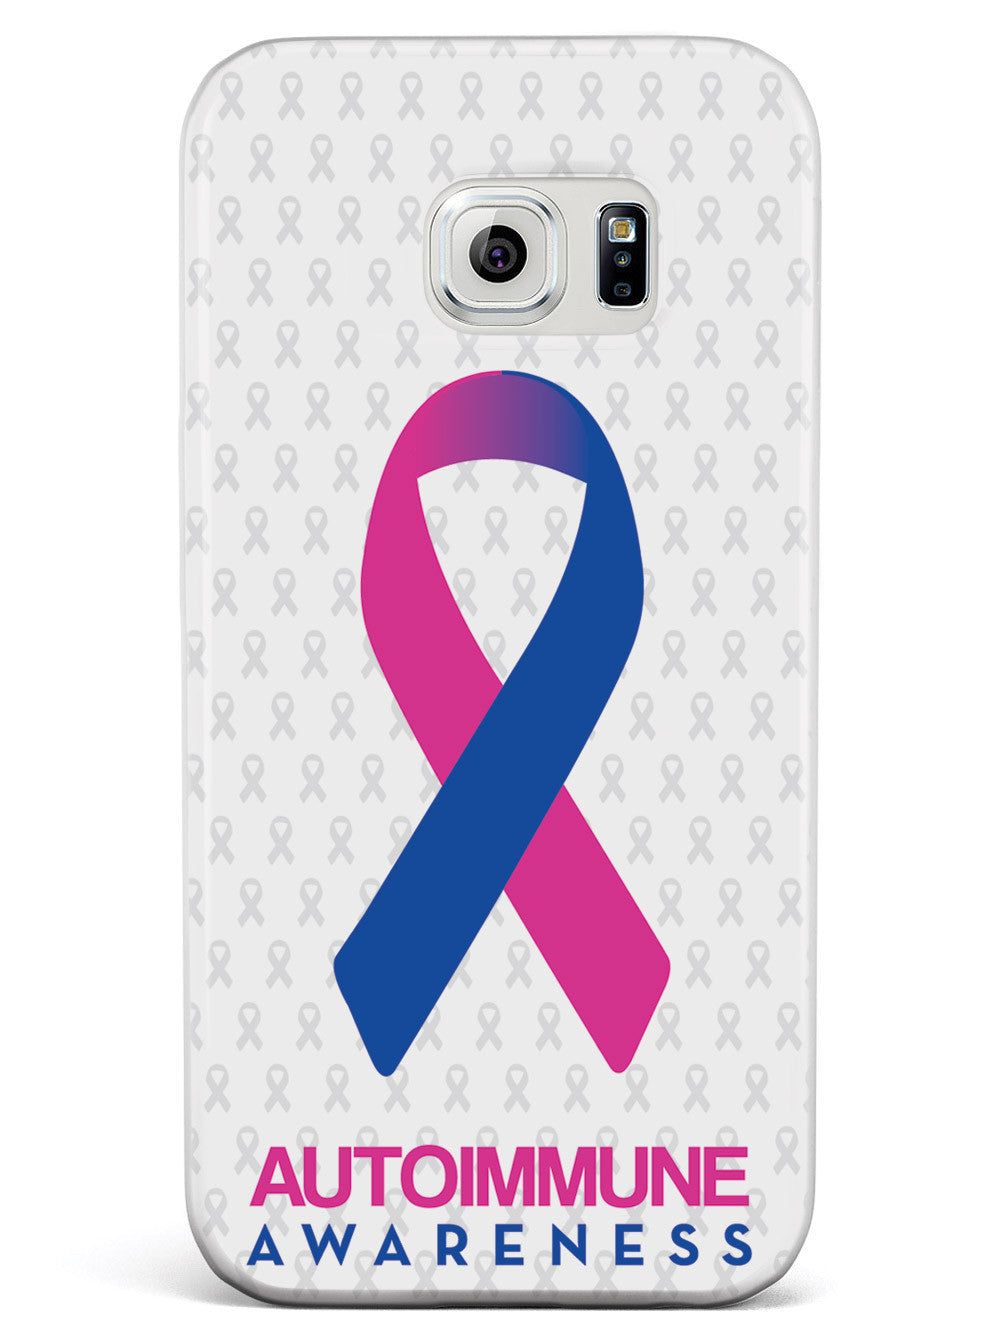 Autoimmune Disease - Awareness Ribbon - White Case